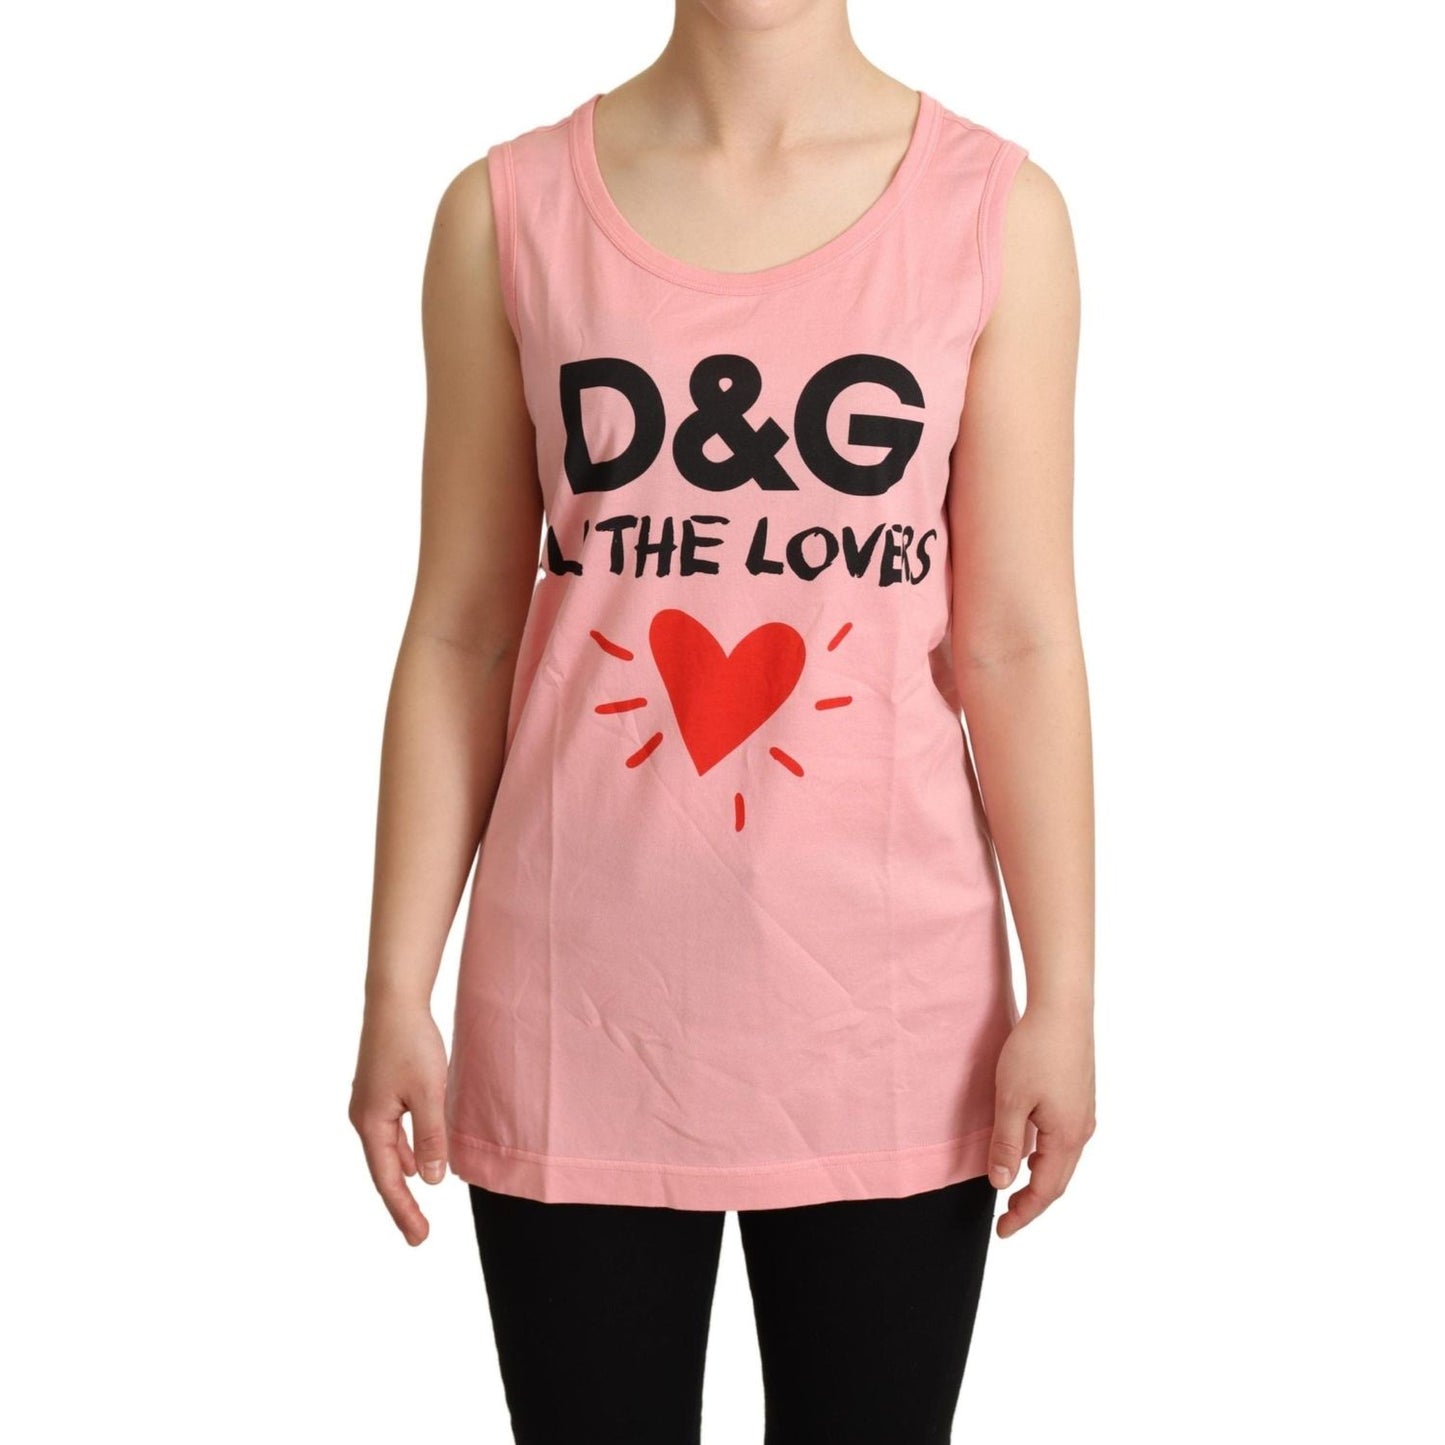 Dolce & Gabbana Chic Pink Motive Print Crewneck Tee WOMAN T-SHIRTS pink-all-the-lovers-tank-top-t-shirt IMG_9812-scaled-406dcd92-a32.jpg